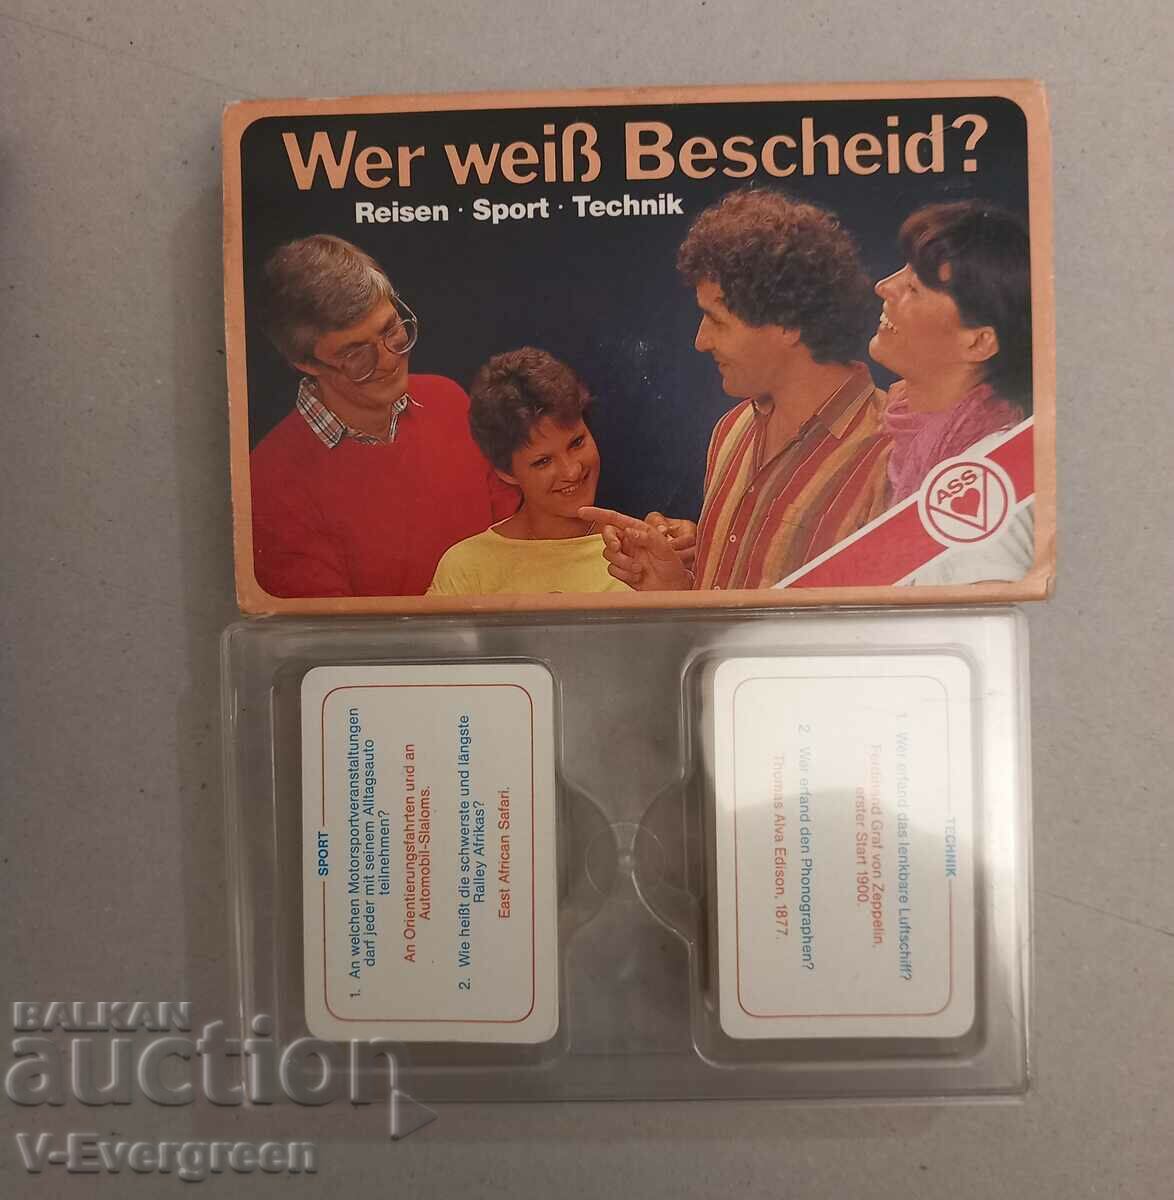 German playing cards, Board game Wer weiss Bescheid